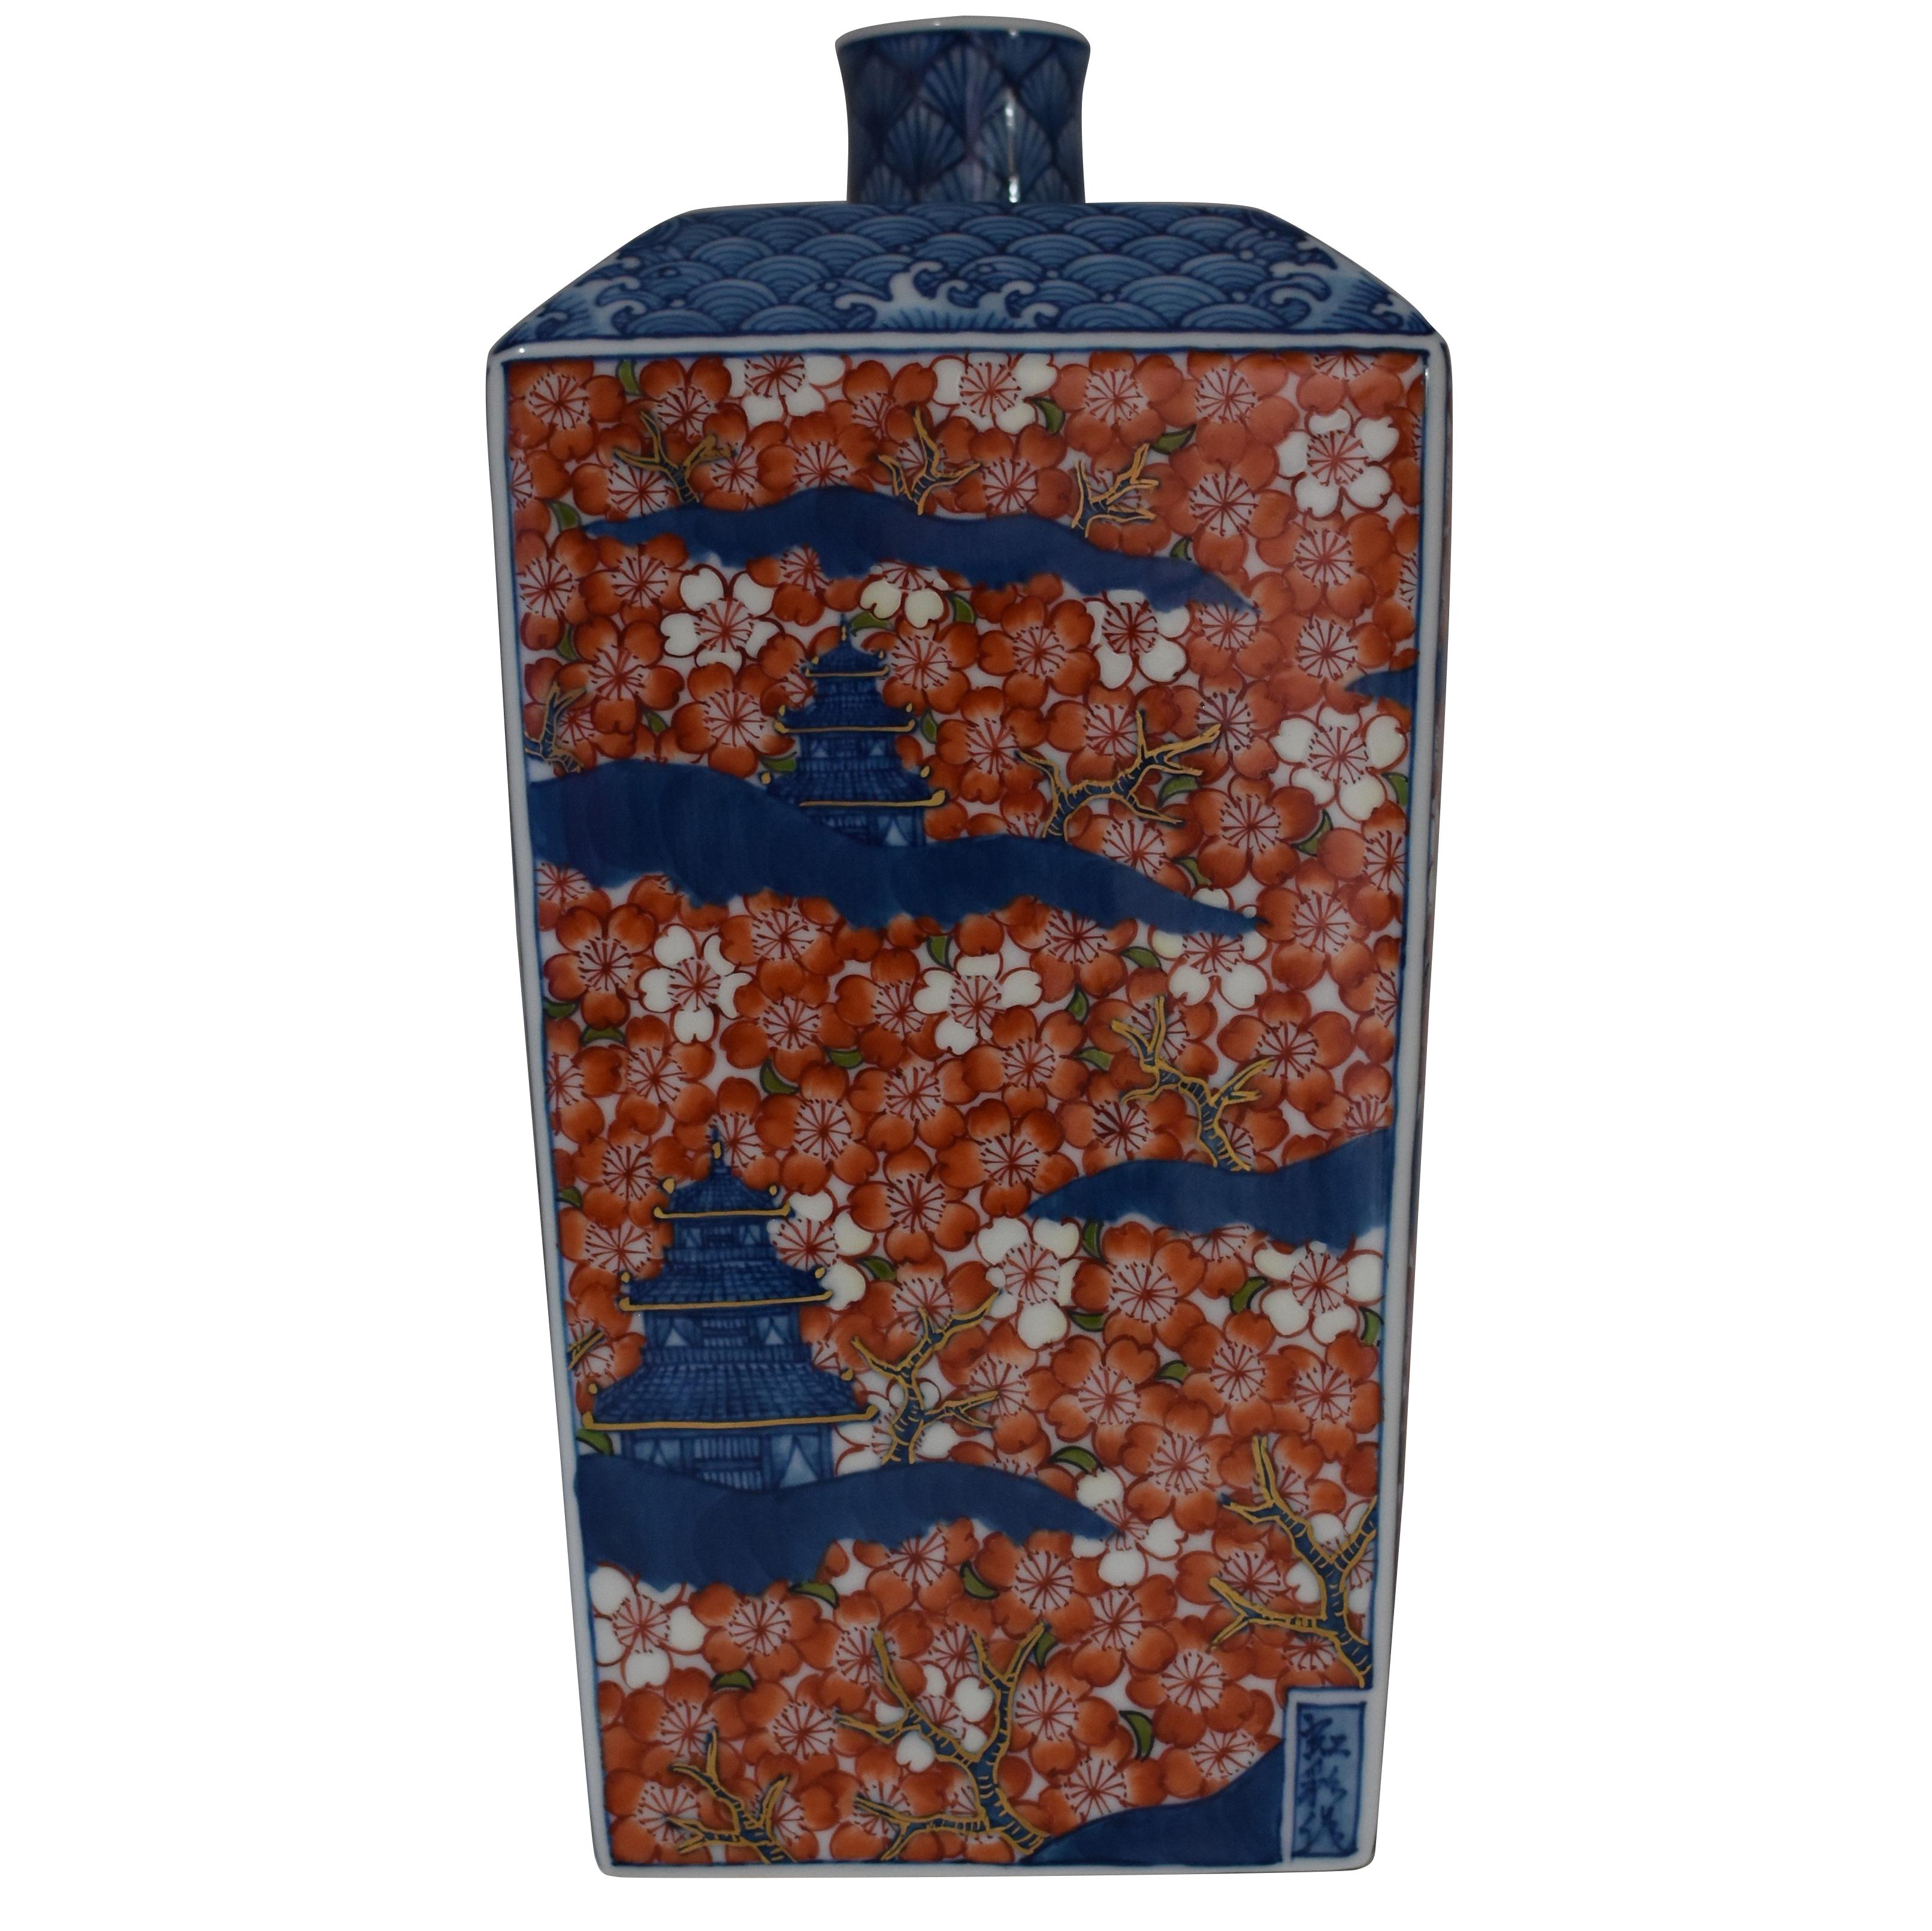 Contemporary Imari Red Blue Porcelain Decorative Vase by Master Artist